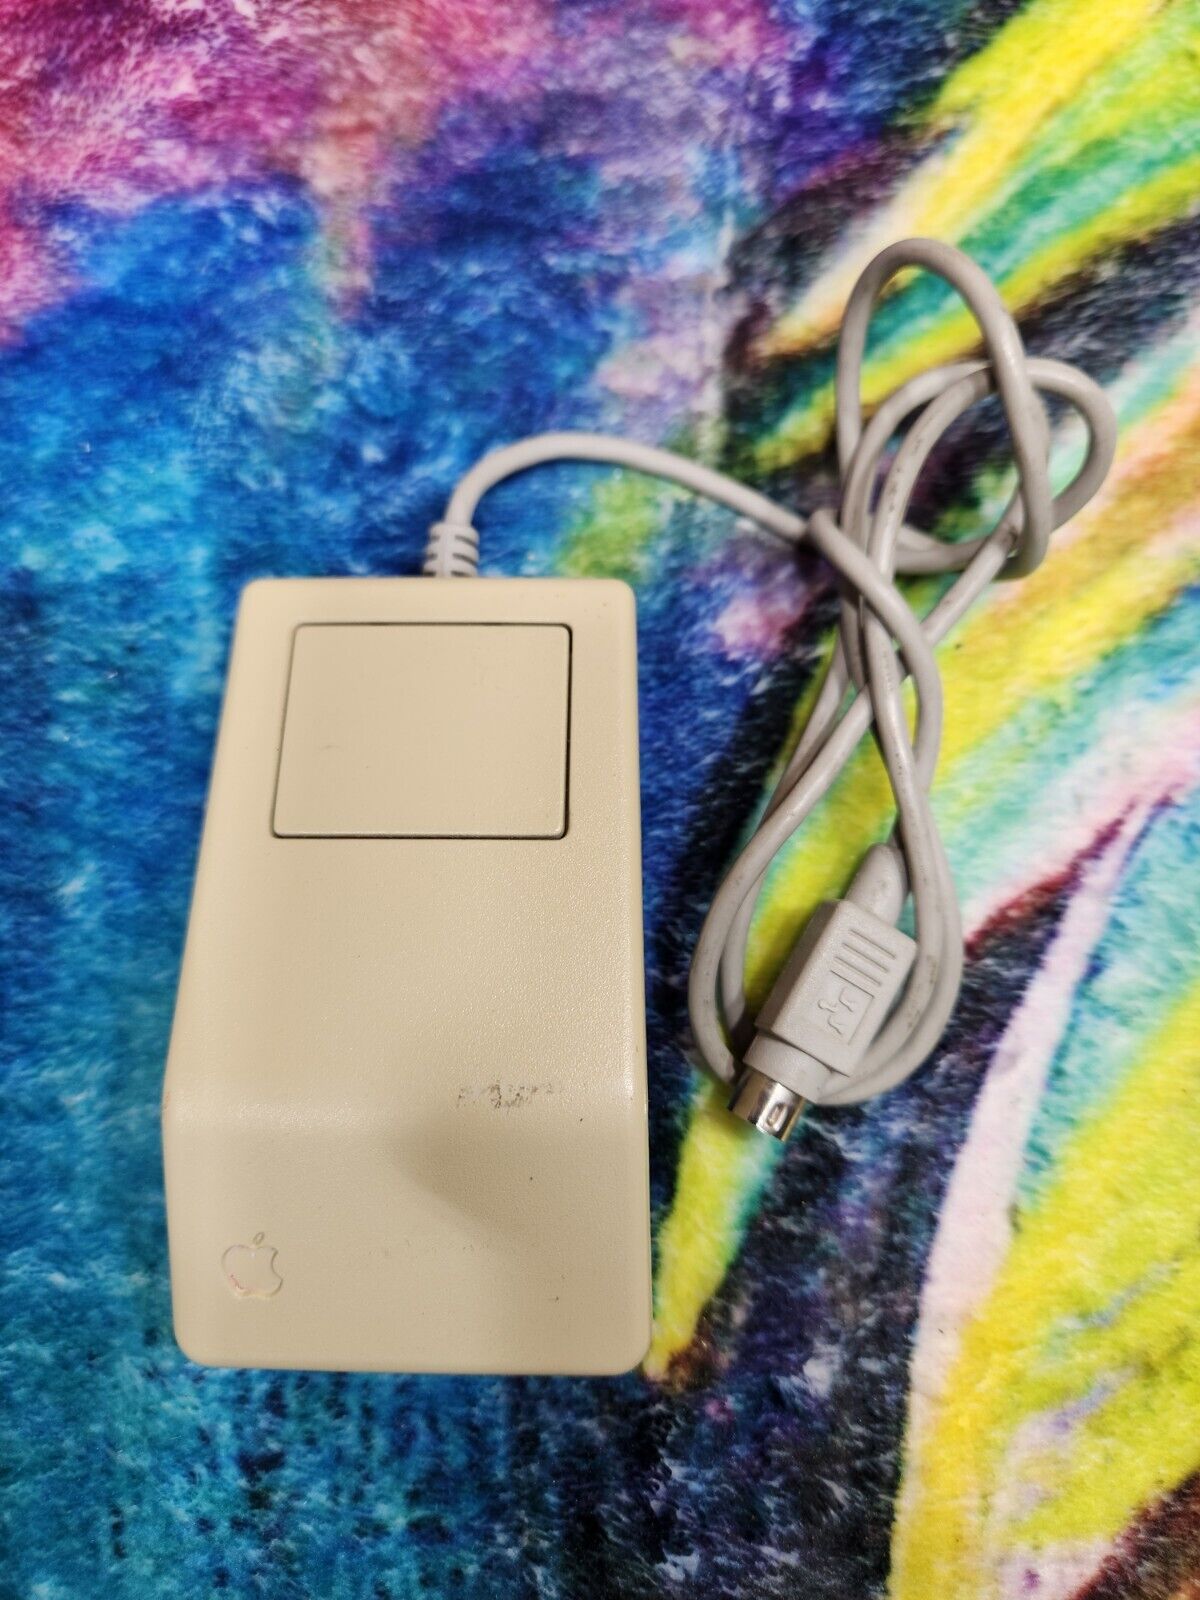 Apple Desktop Bus Mouse I ADB Beige Vintage for Macintosh G5431 M0142 A9M0331